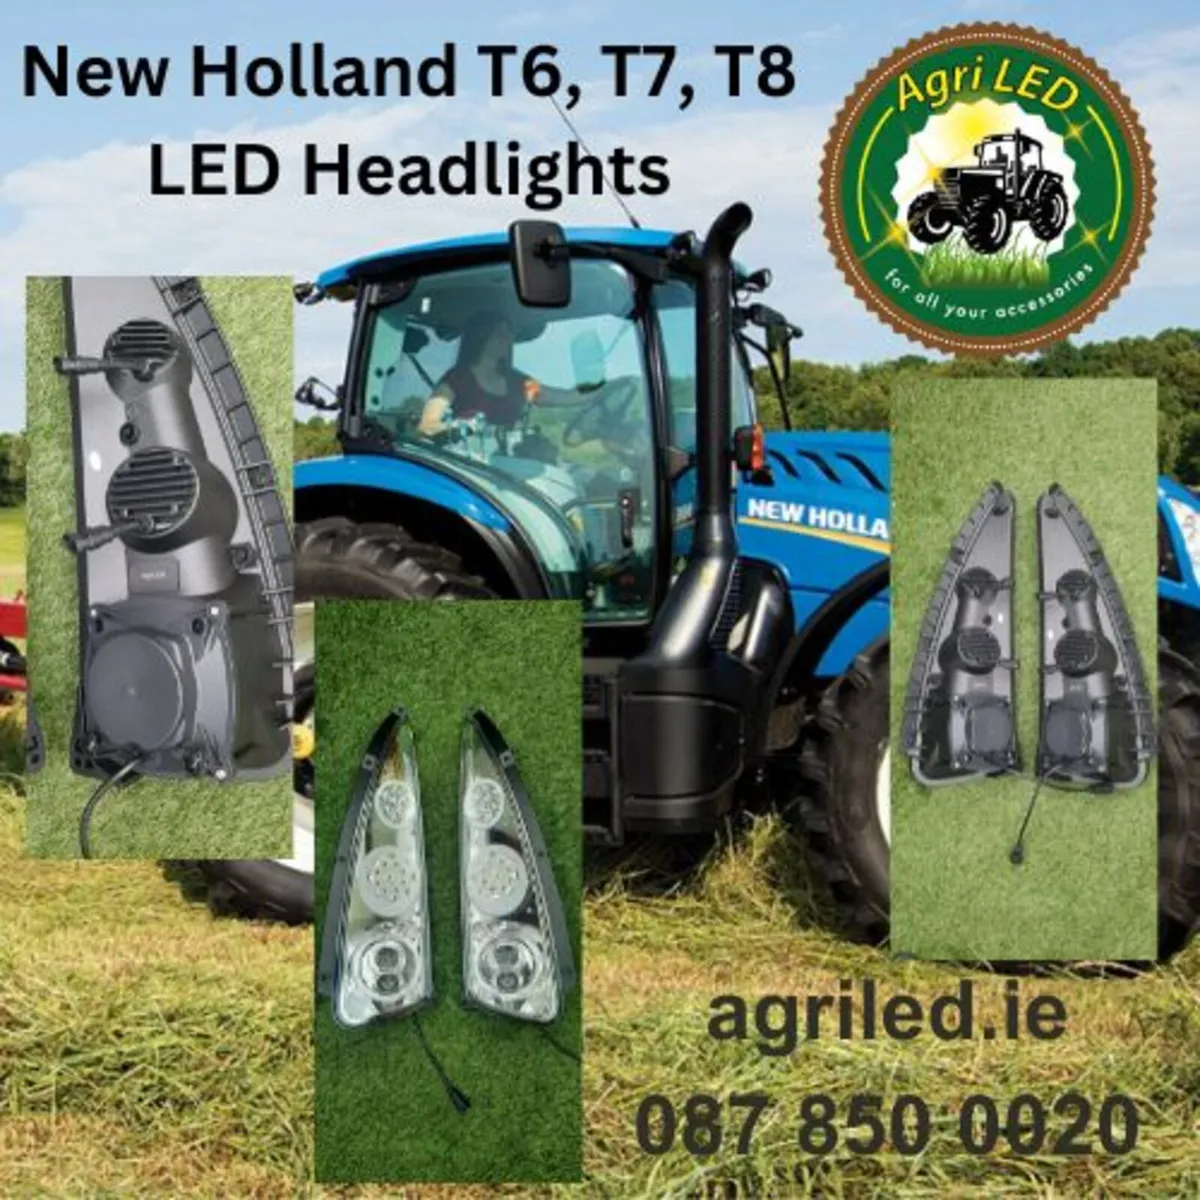 New Holland T6, T7, T8 LED Headlights